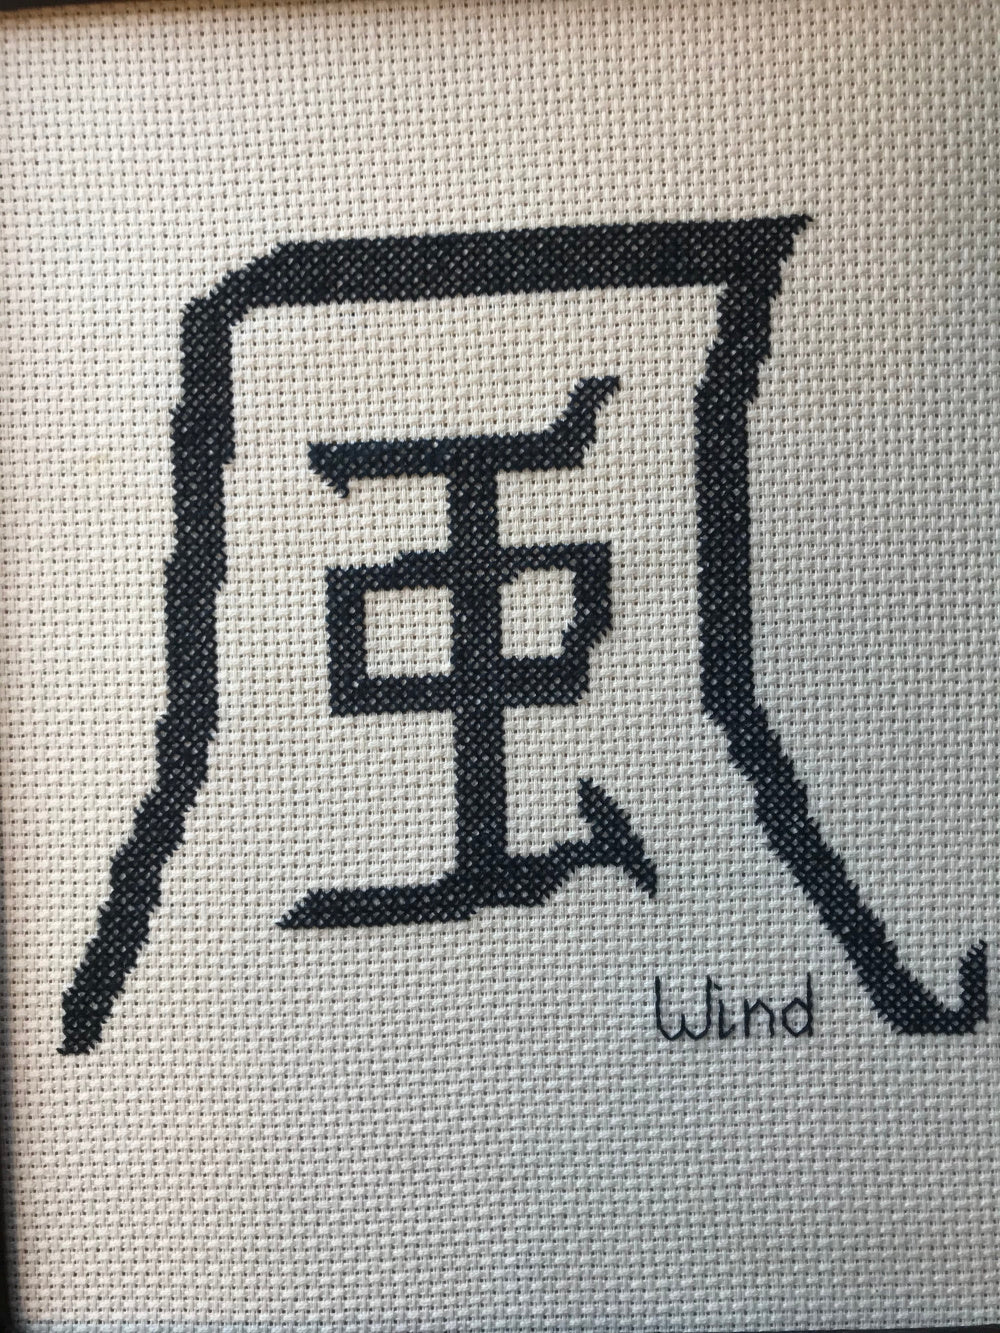 Kanji Quilt and Cross Stitch Patterns